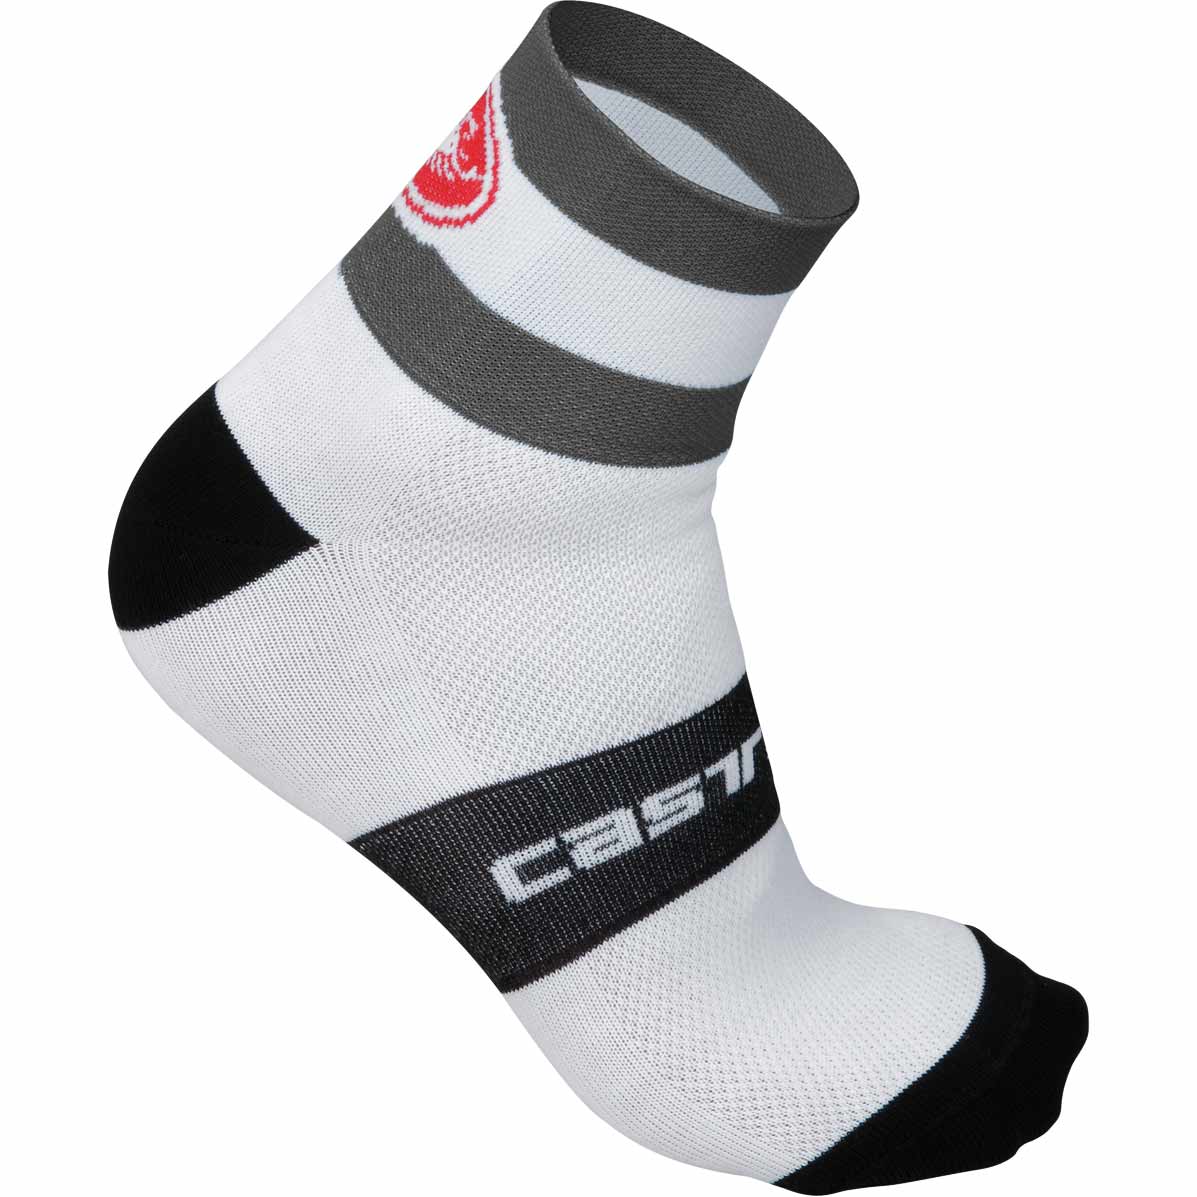 VELOCISSIMO DS 6 SOCK - Men's cycling socks